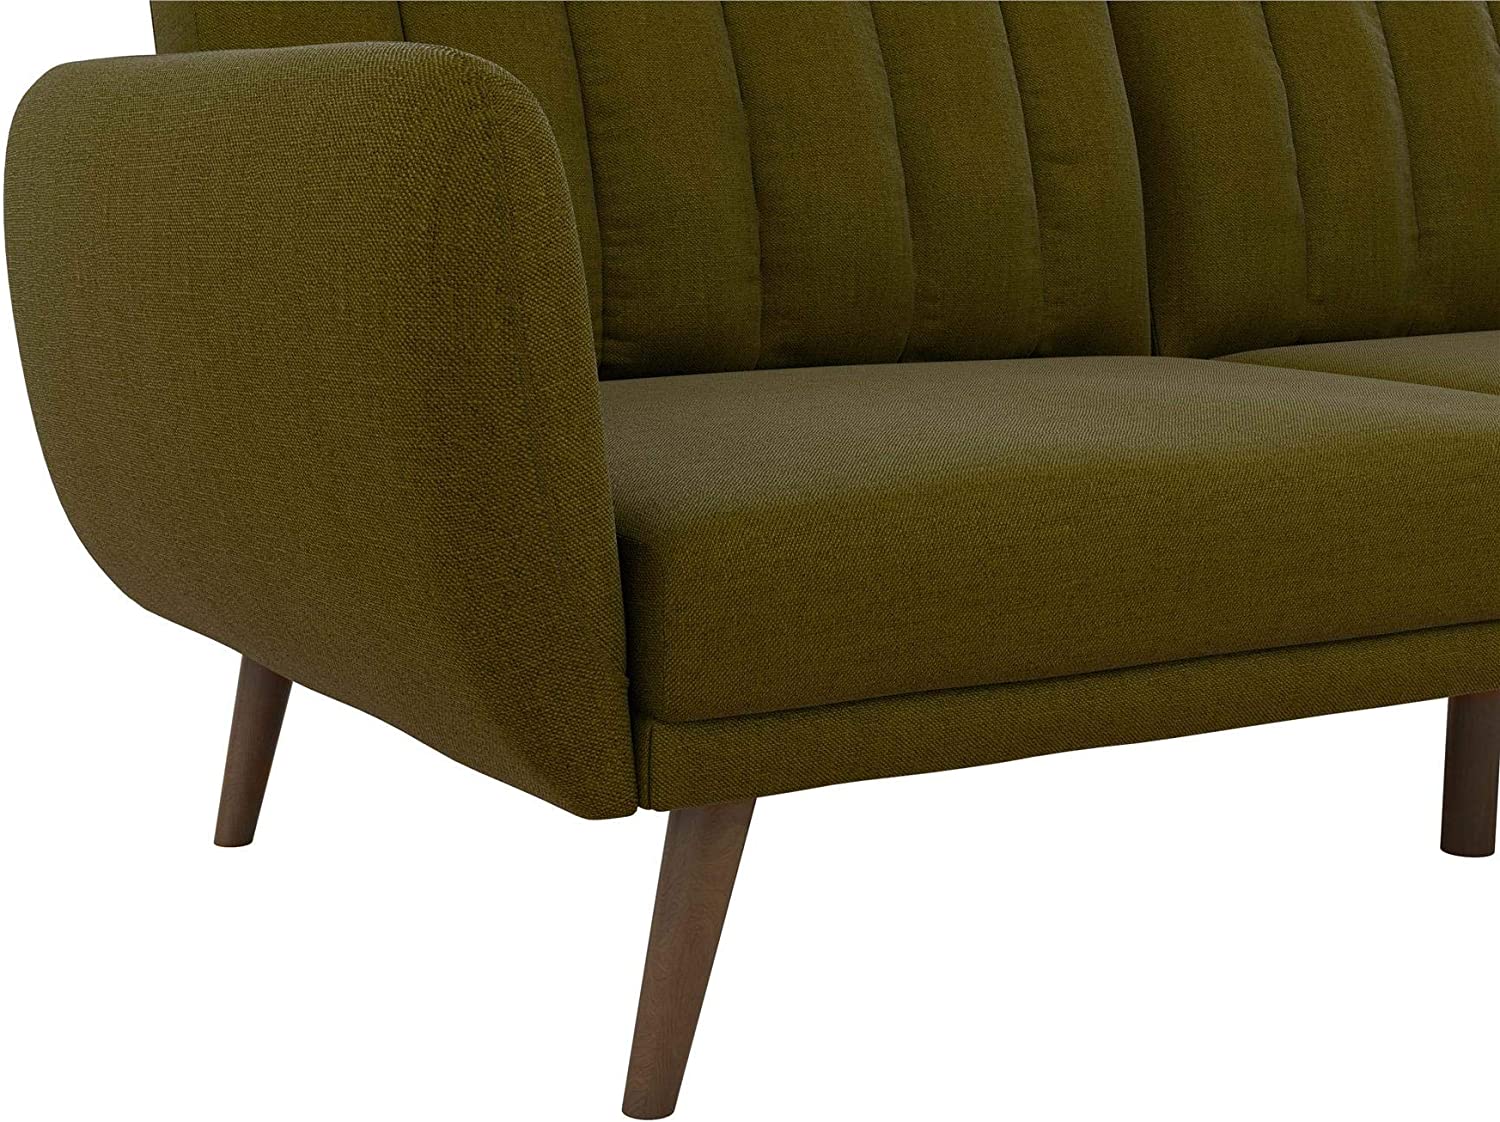 Sofa Futon - Premium Upholstery and Wooden Legs - Green